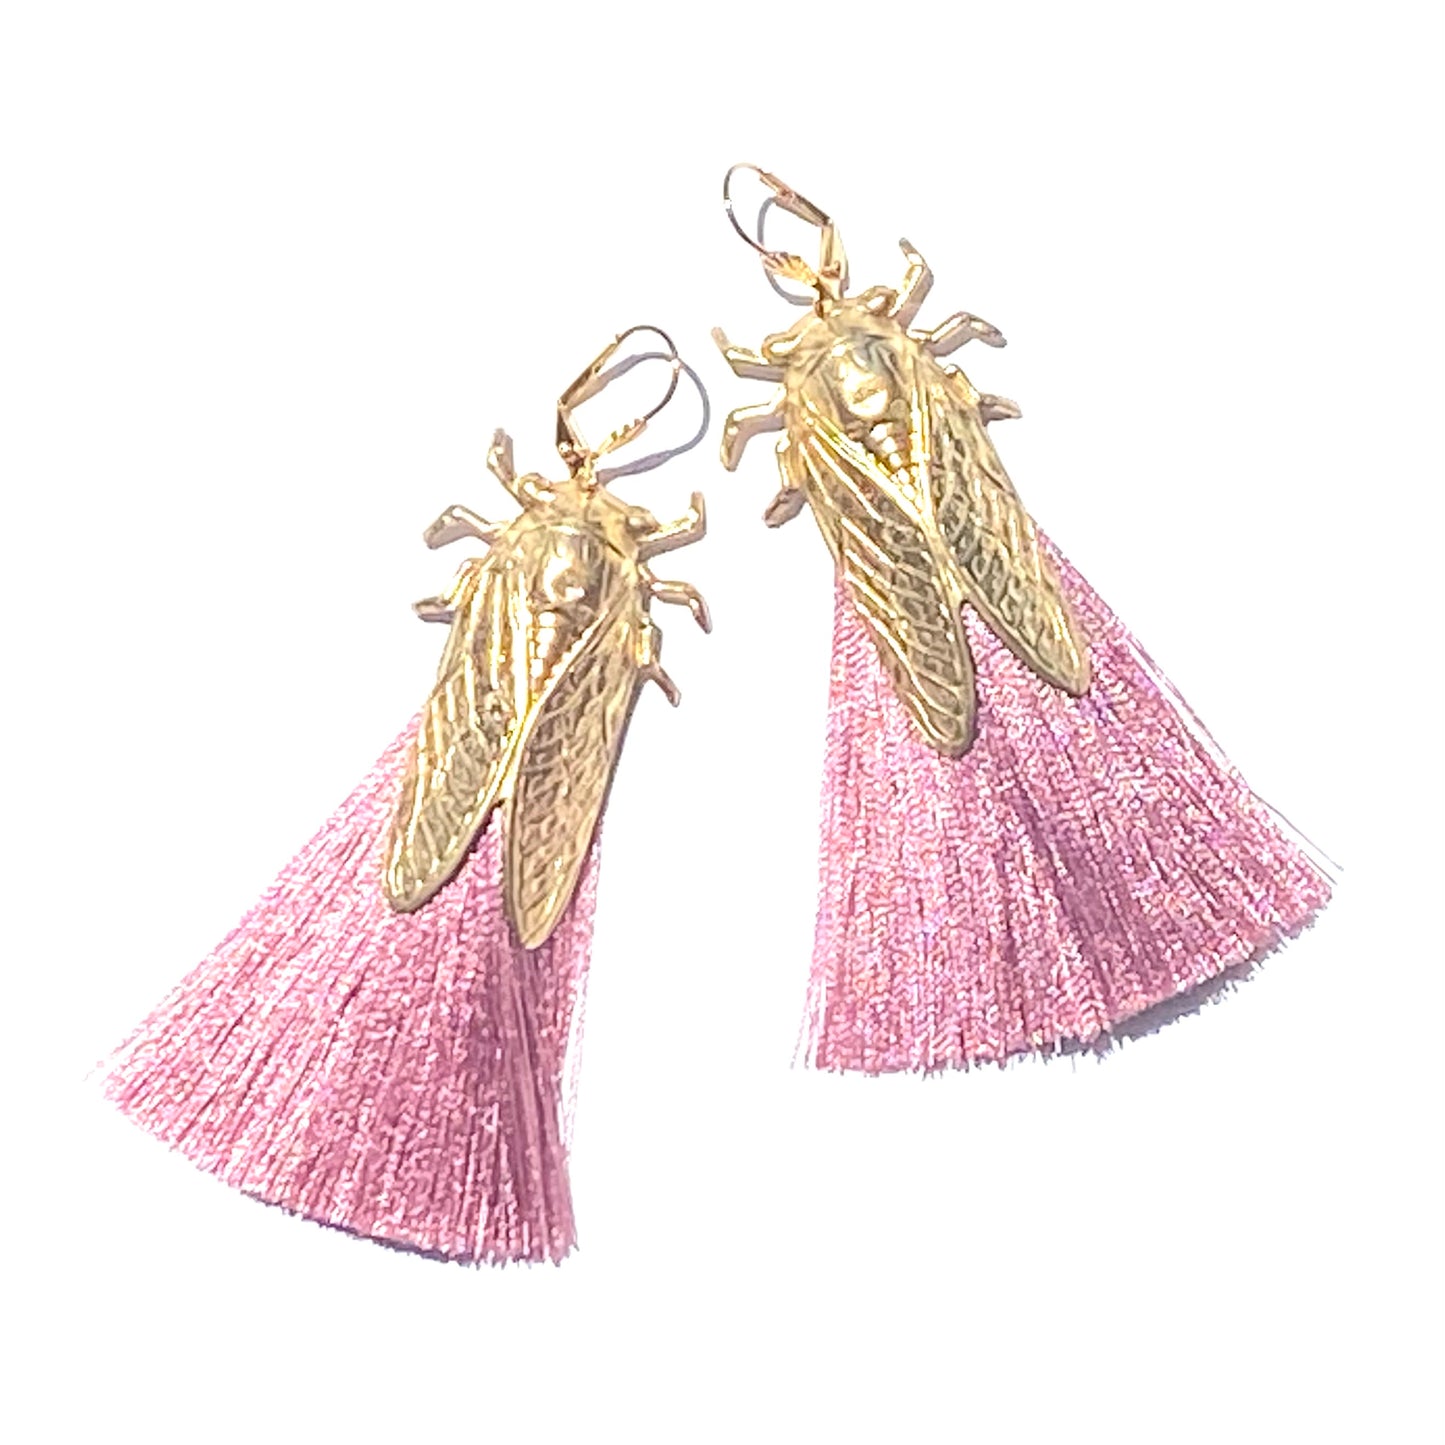 Cicada bug earrings with silky tassels